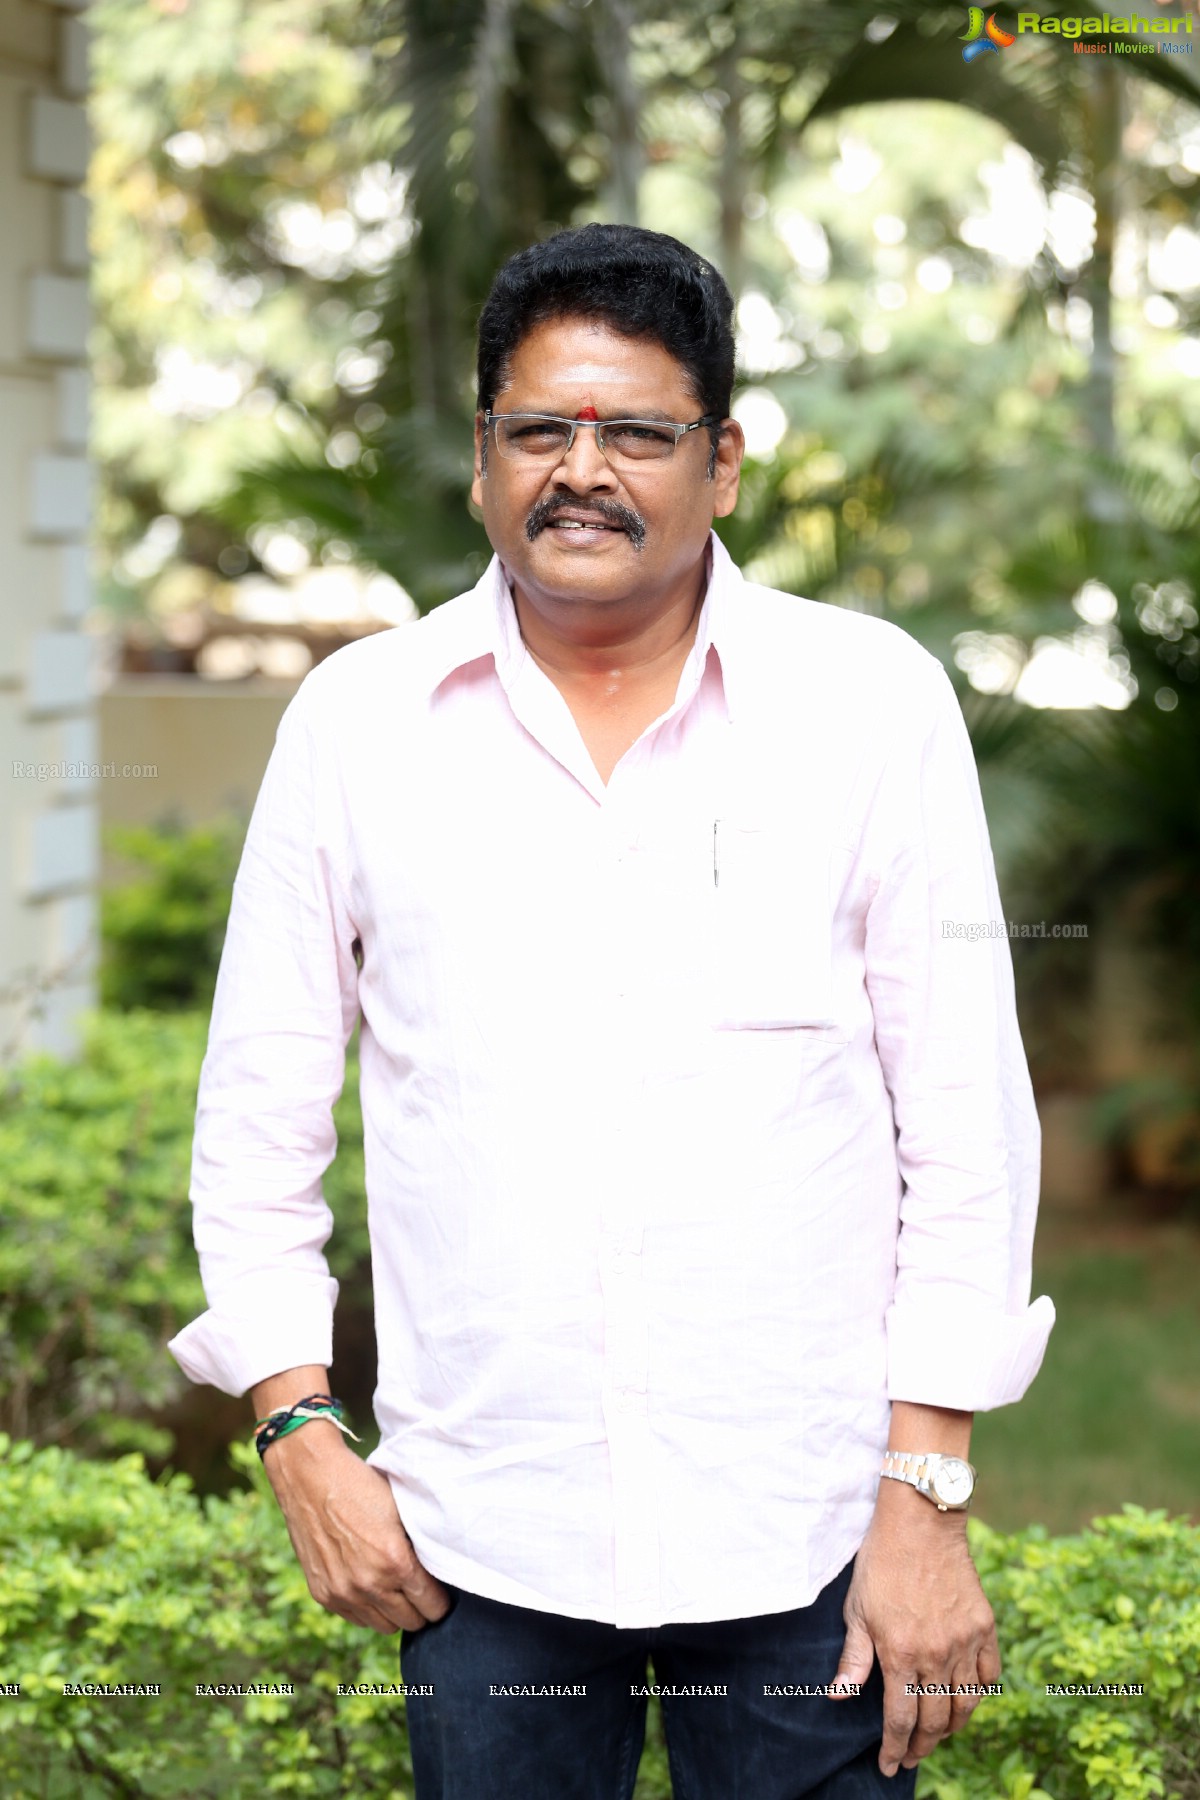 Director KS Ravikumar at Ruler Movie Interview